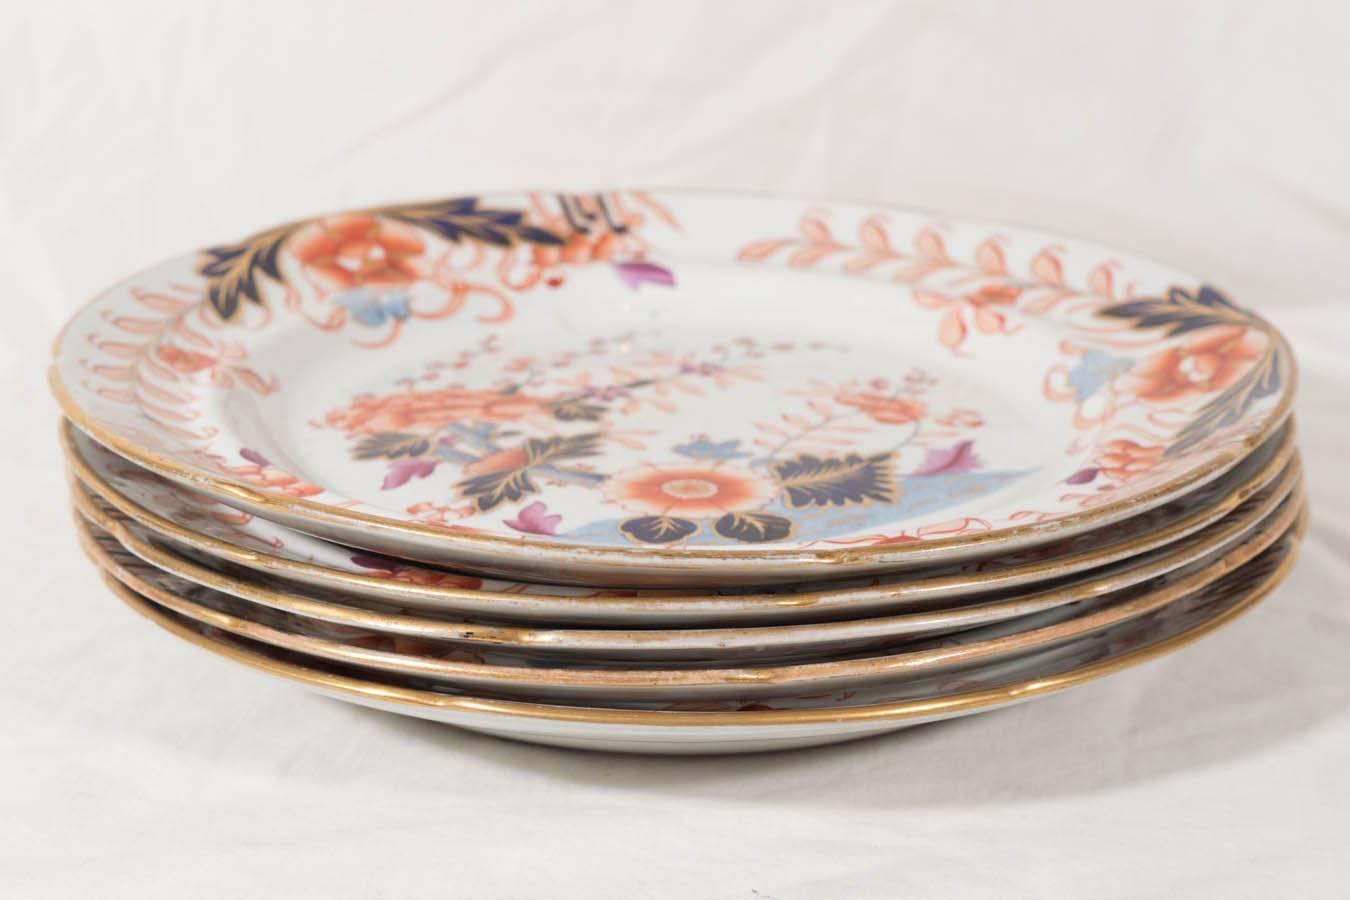 19th Century Set of a Dozen Davenport Dishes in the Imari Style